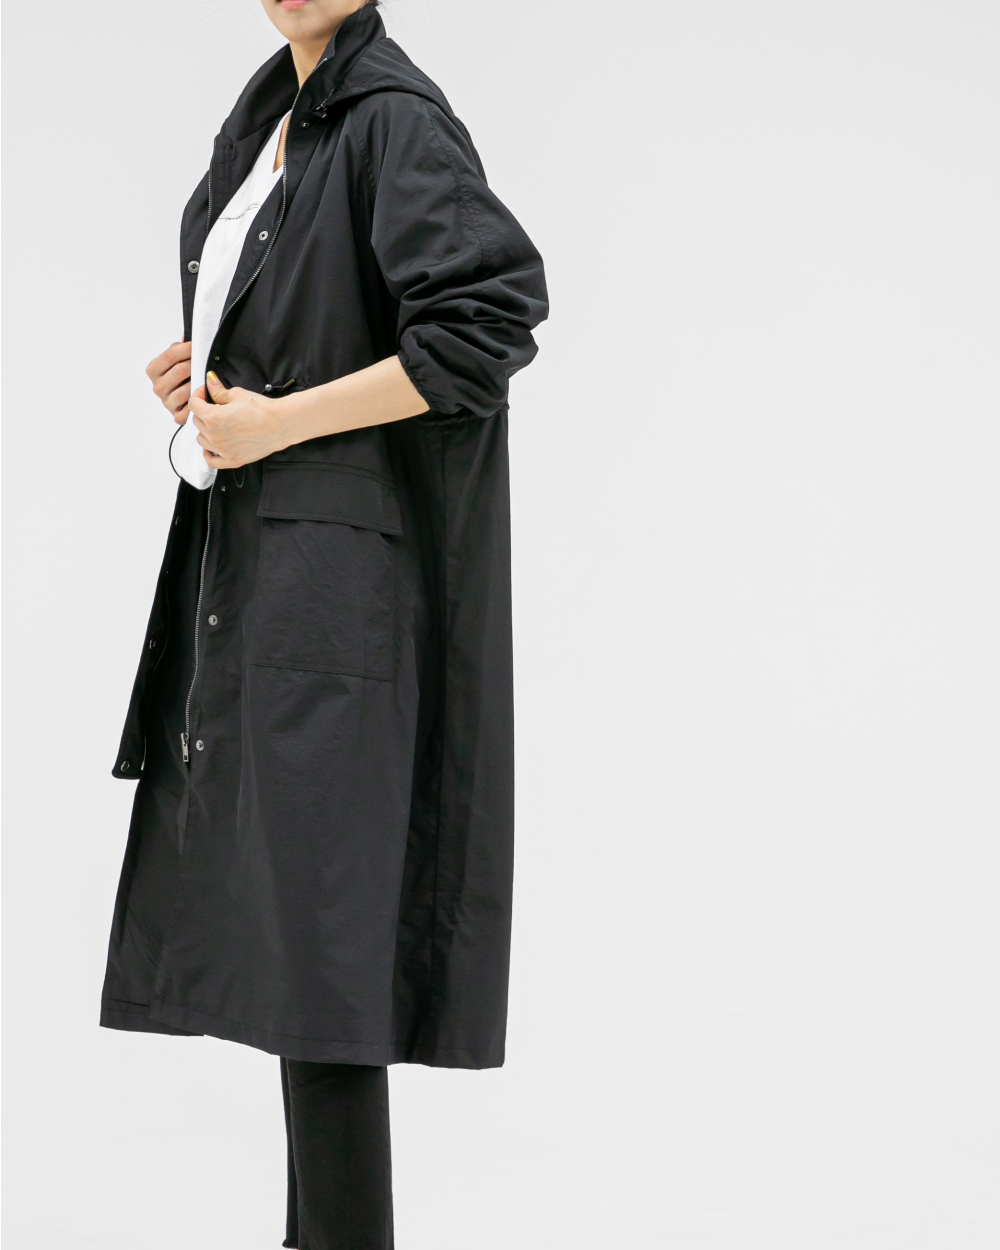 coat model image-S1L27